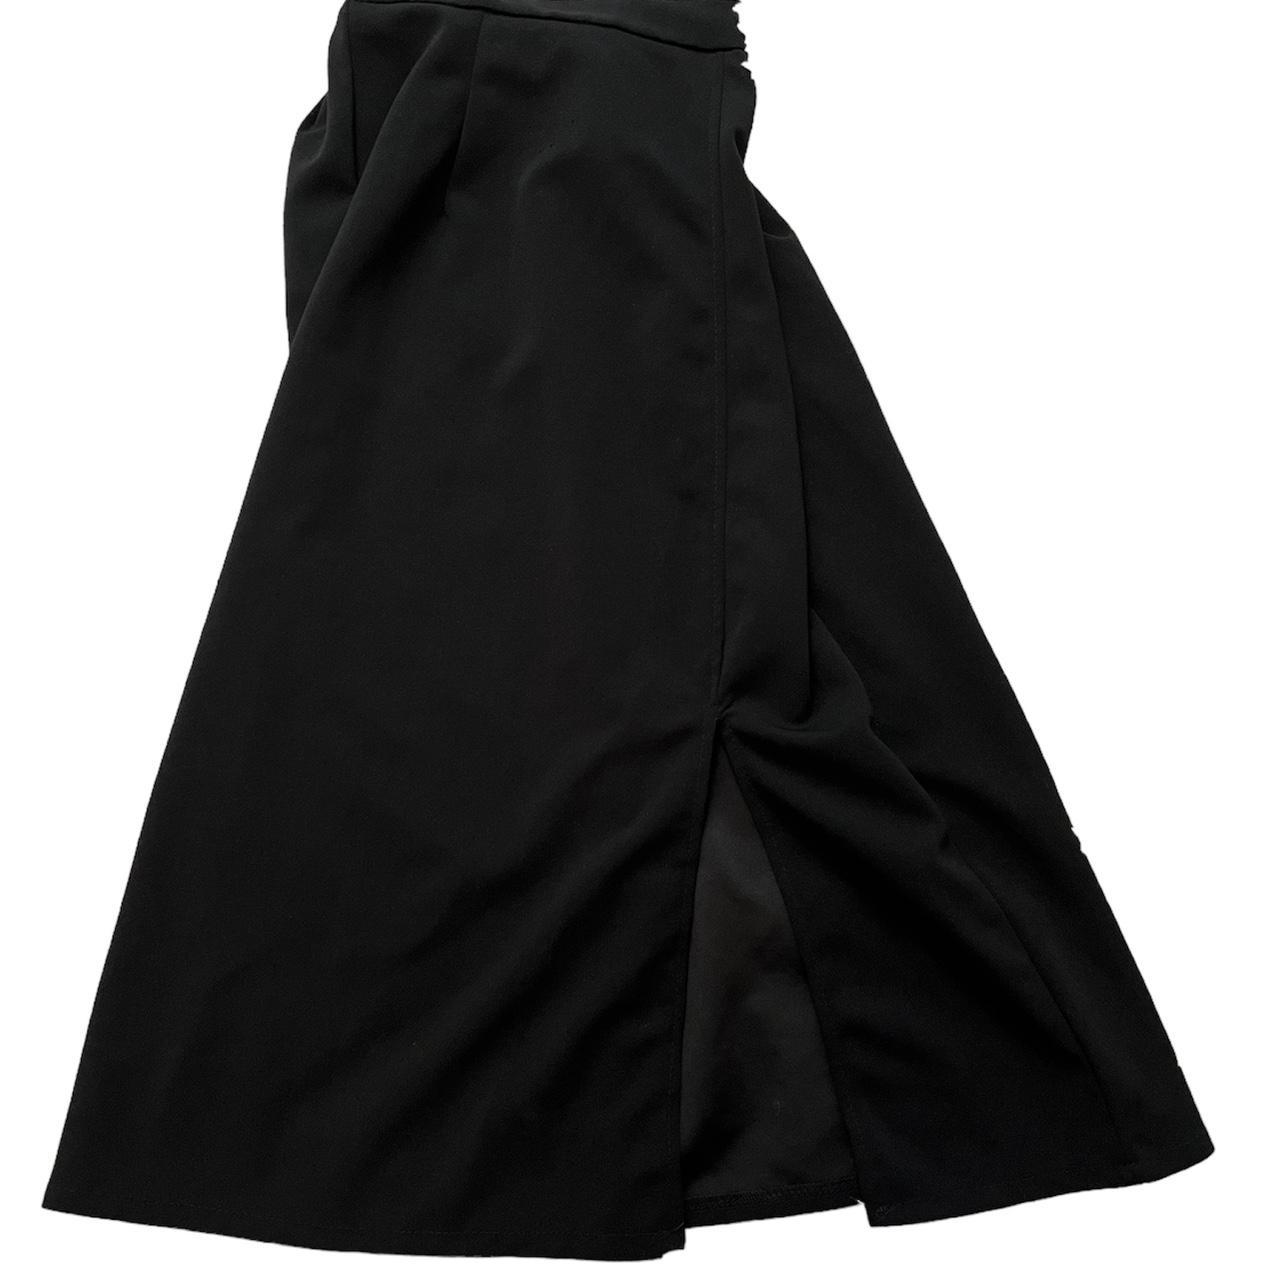 Long black maxi/midi skirt -size small -no flaws - Depop